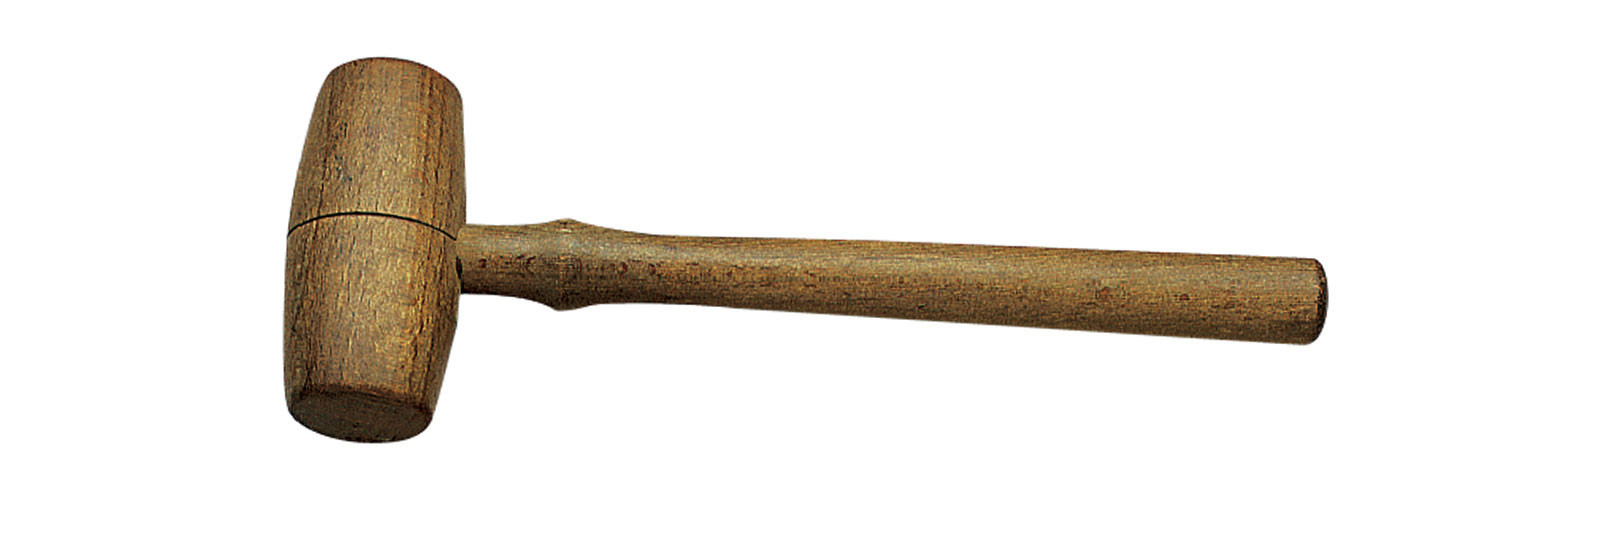 Wooden hammer